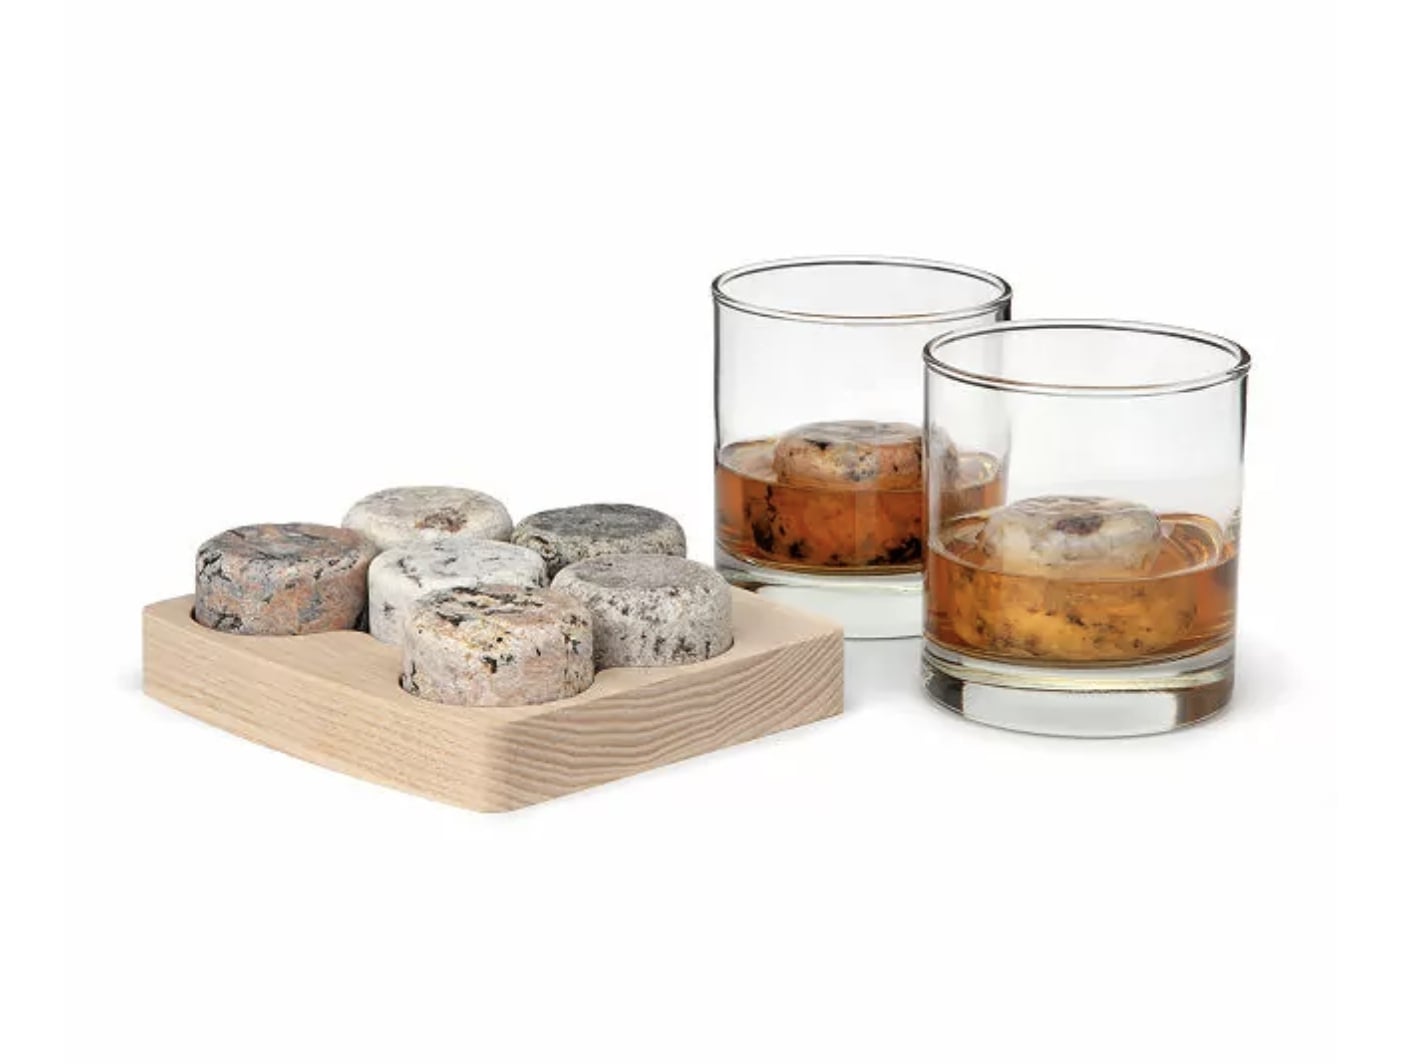 Aberdeen Oak Whiskey Stones Set - Whiskey Rocks Chilling Stones, Stainless-Steel Whiskey Stone Ice Cubes, Chilling Rocks, Whiskey Stones Large